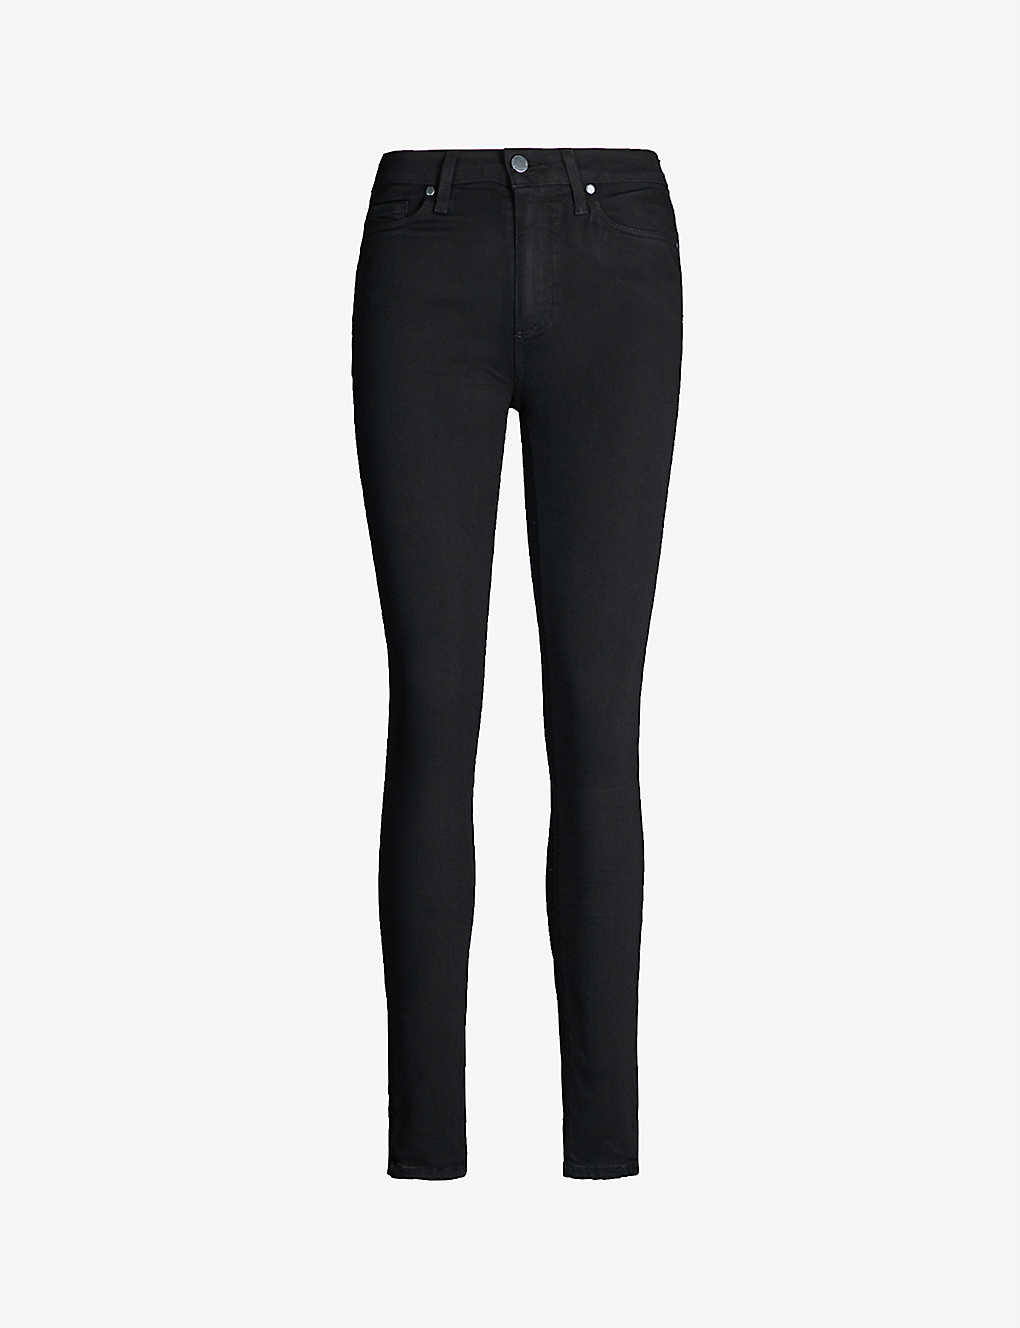 Shop Paige Women's Black Shadow Hoxton Skinny Mid-rise Jeans